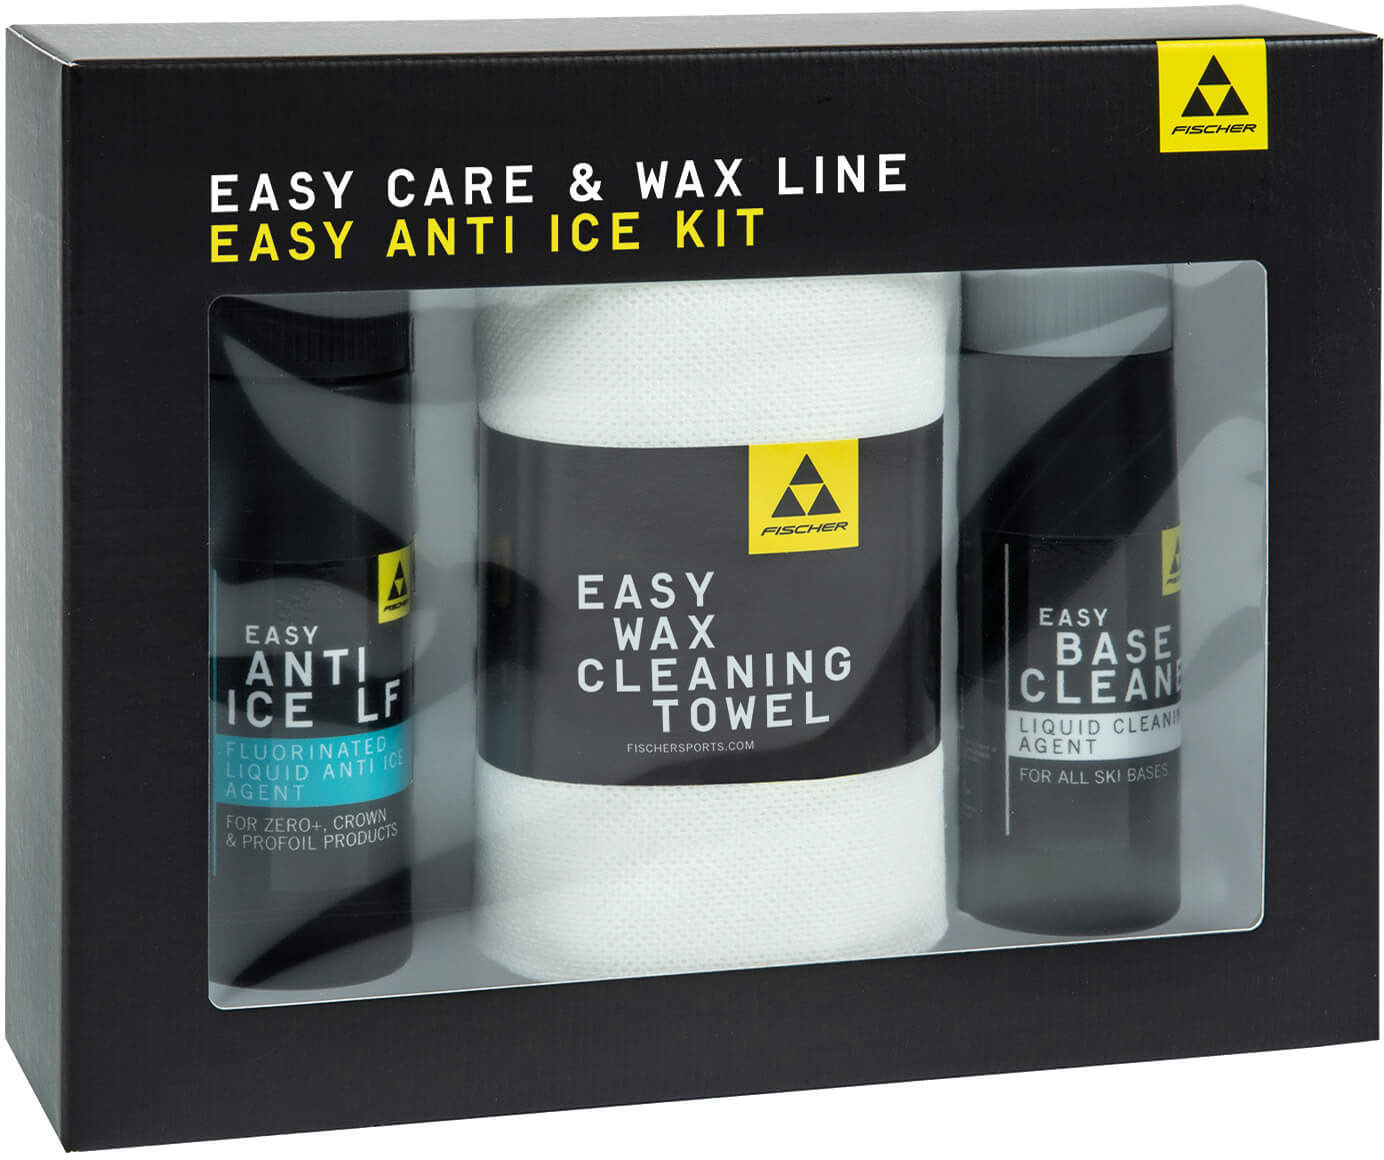 Anti-ice kit